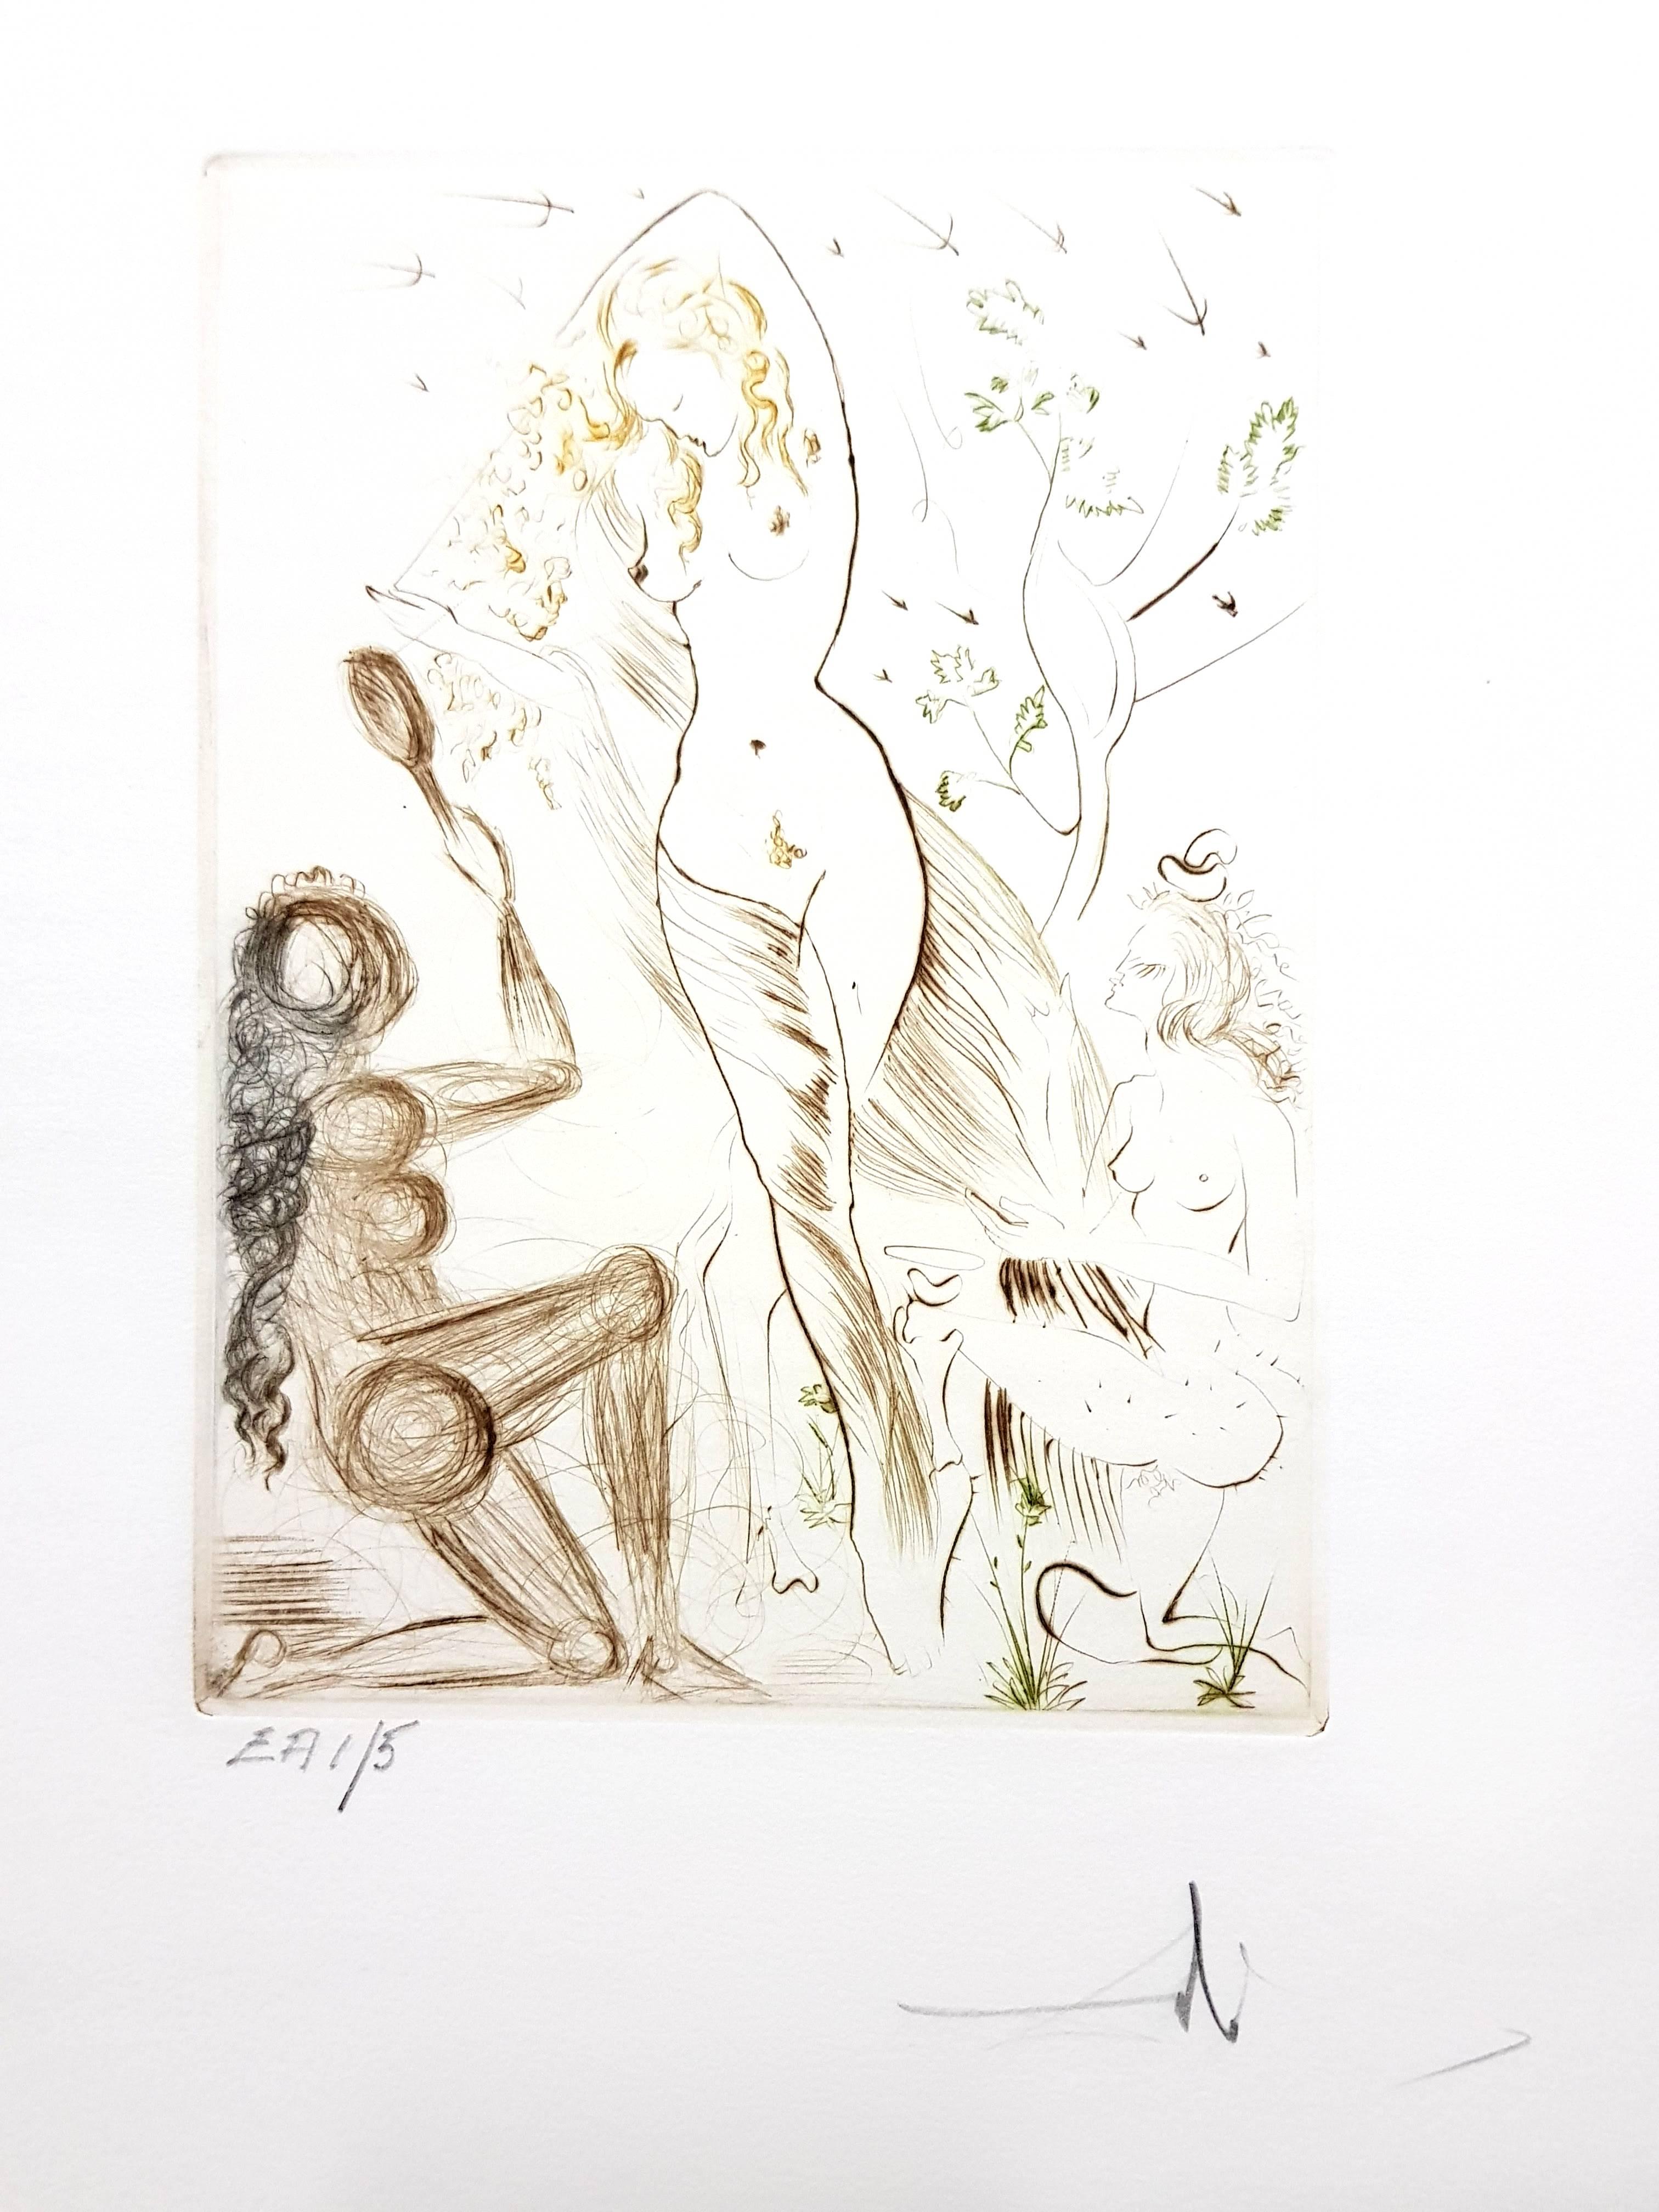 Salvador Dalí Nude Print – Decameron - Portfolio von 10 signierten Original-Stickern von Salvador Dali